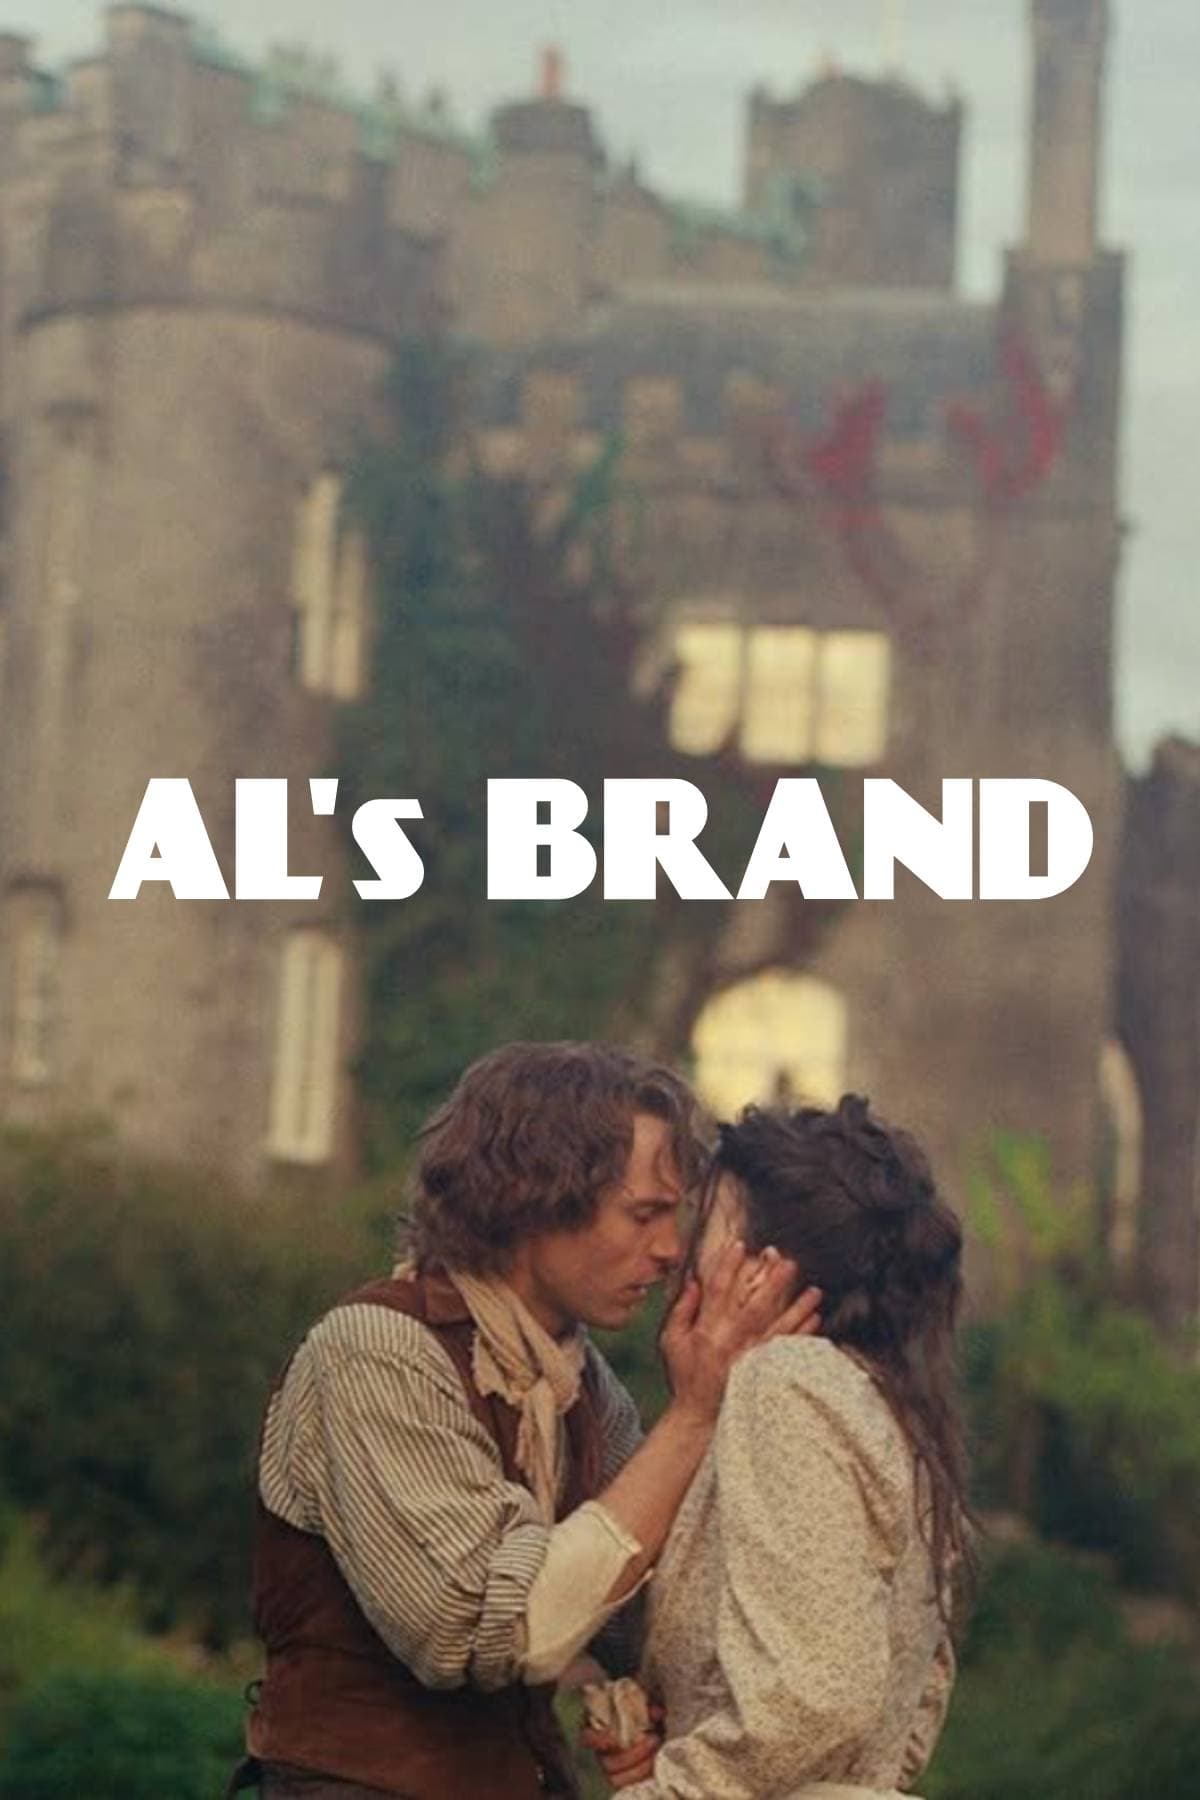 Al's Brand